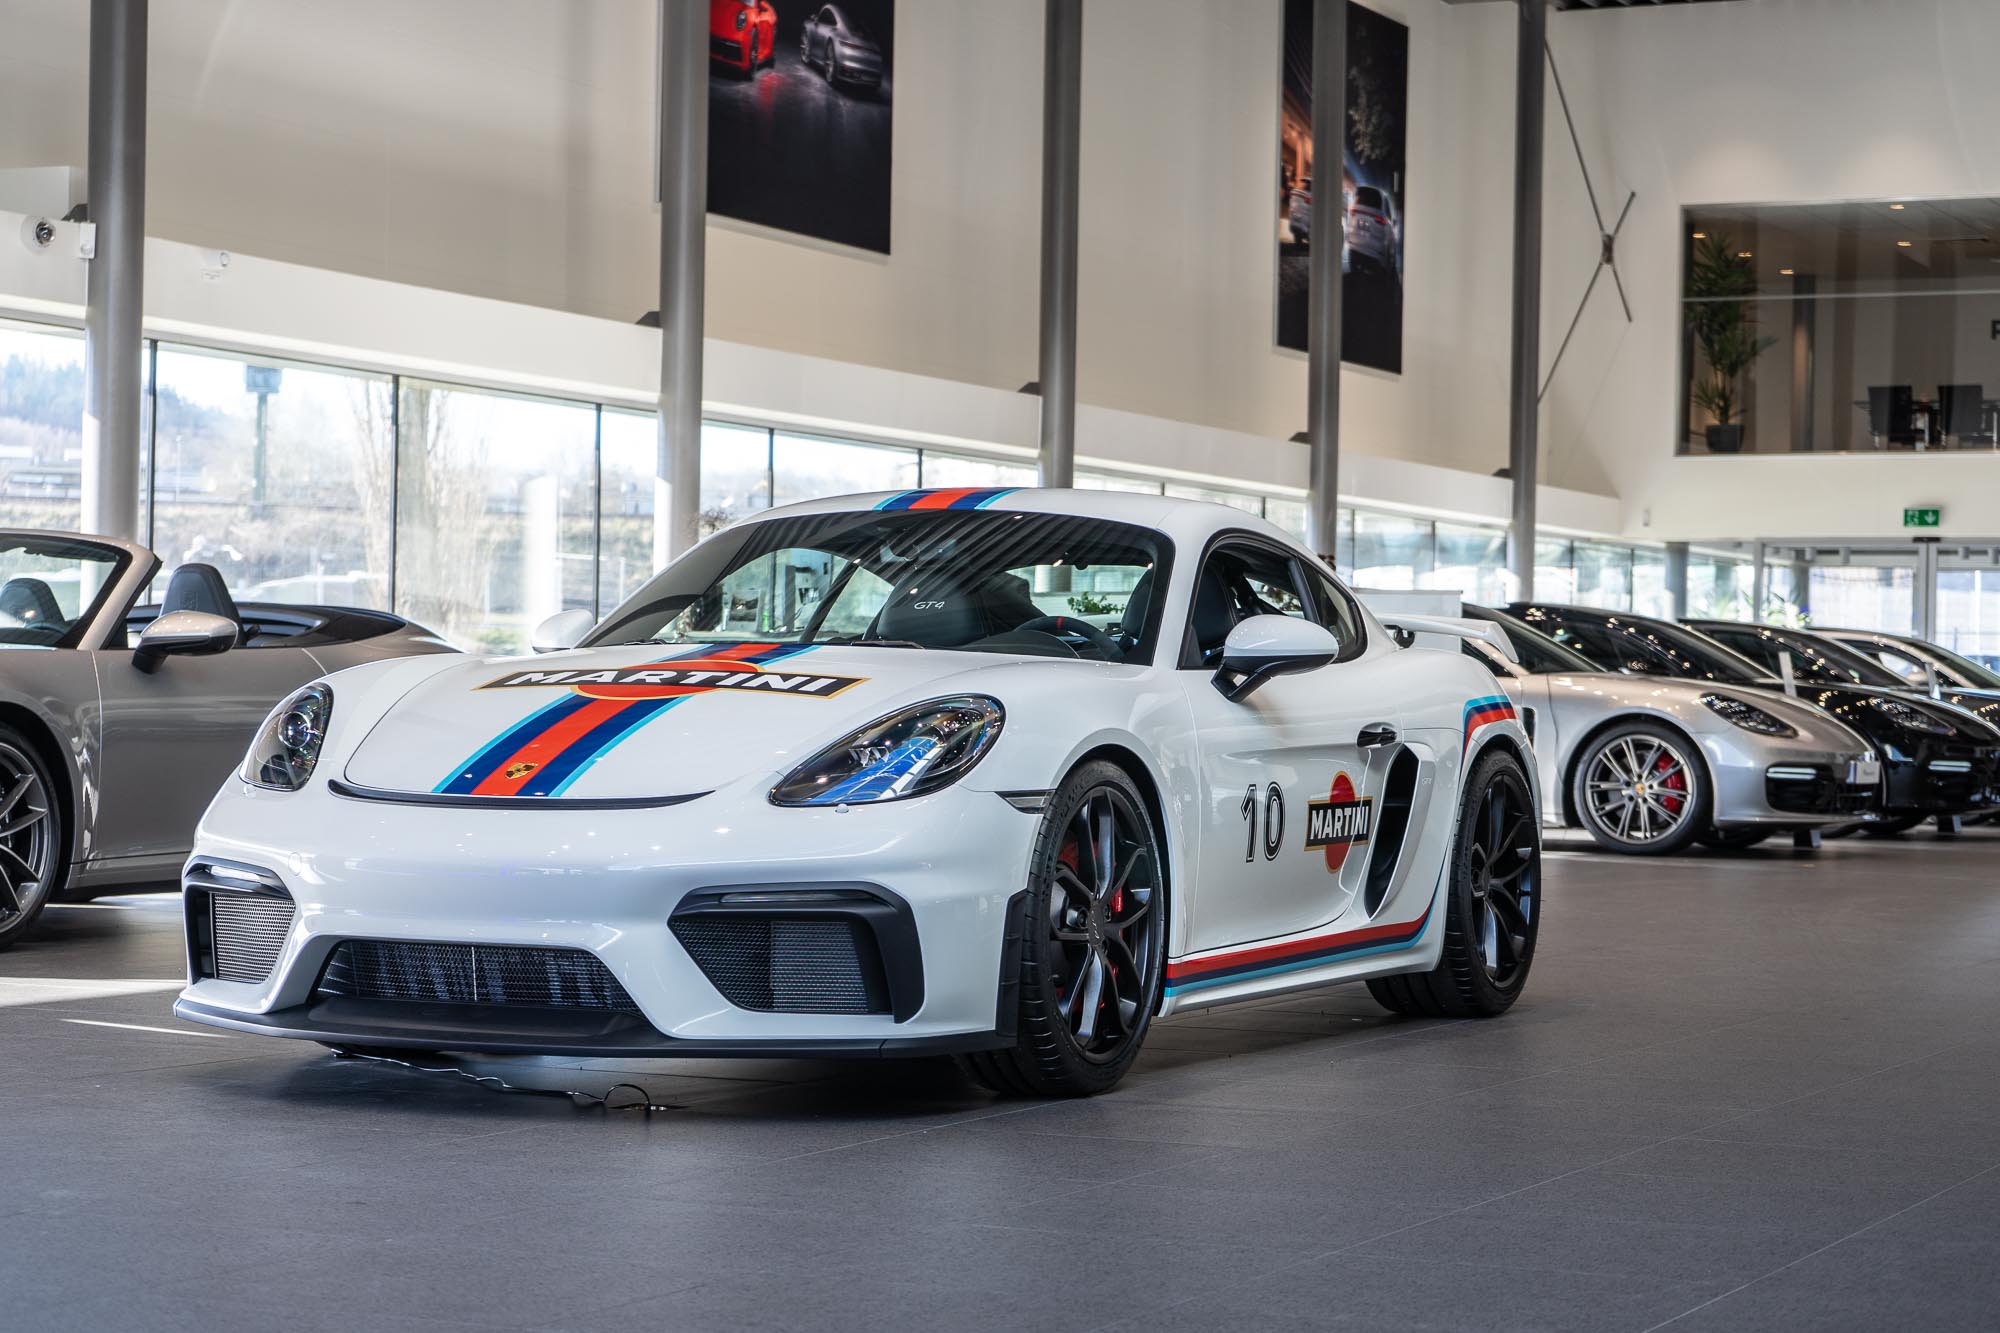 Porsche GT4 Martini stripes